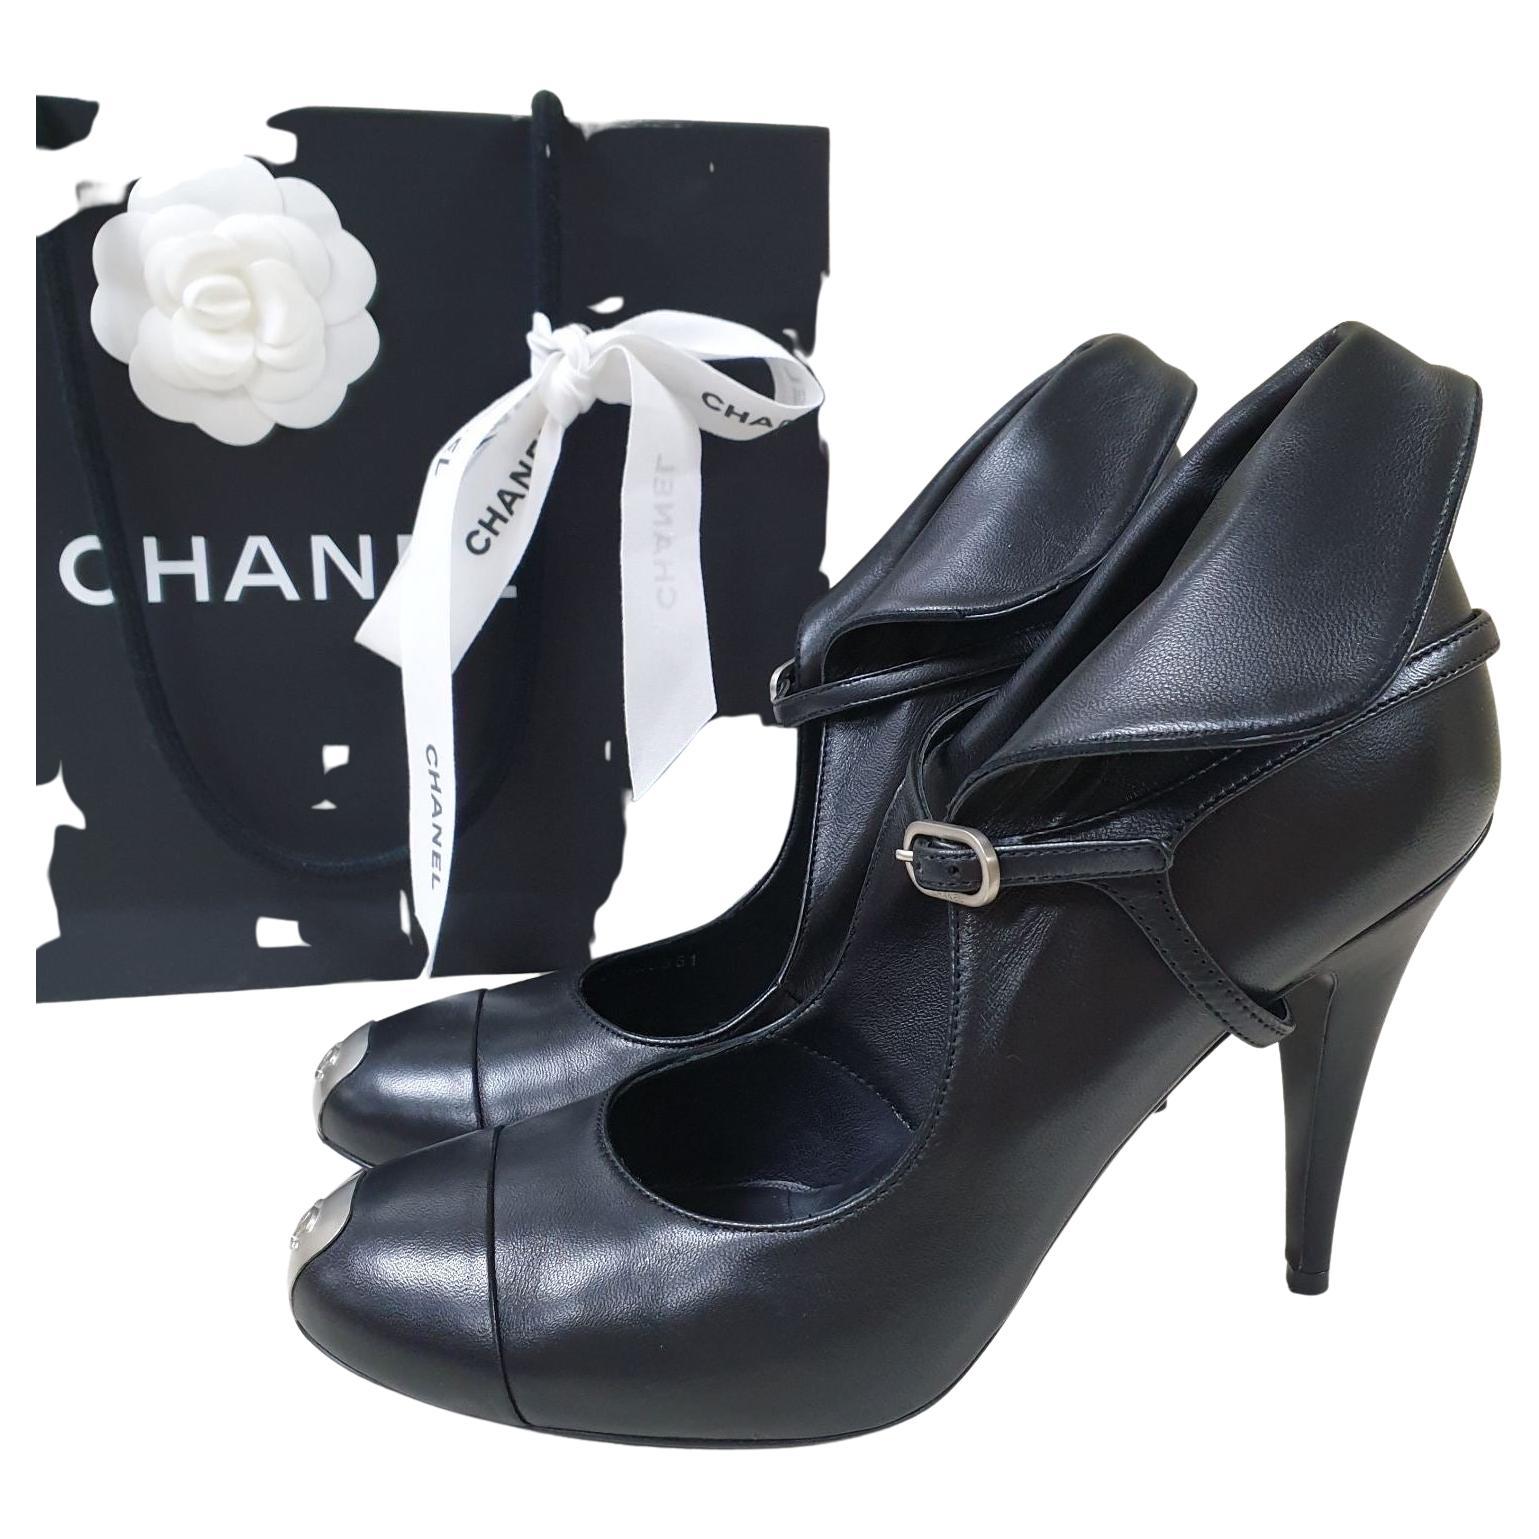 Chanel Logo Sandals - 53 For Sale on 1stDibs